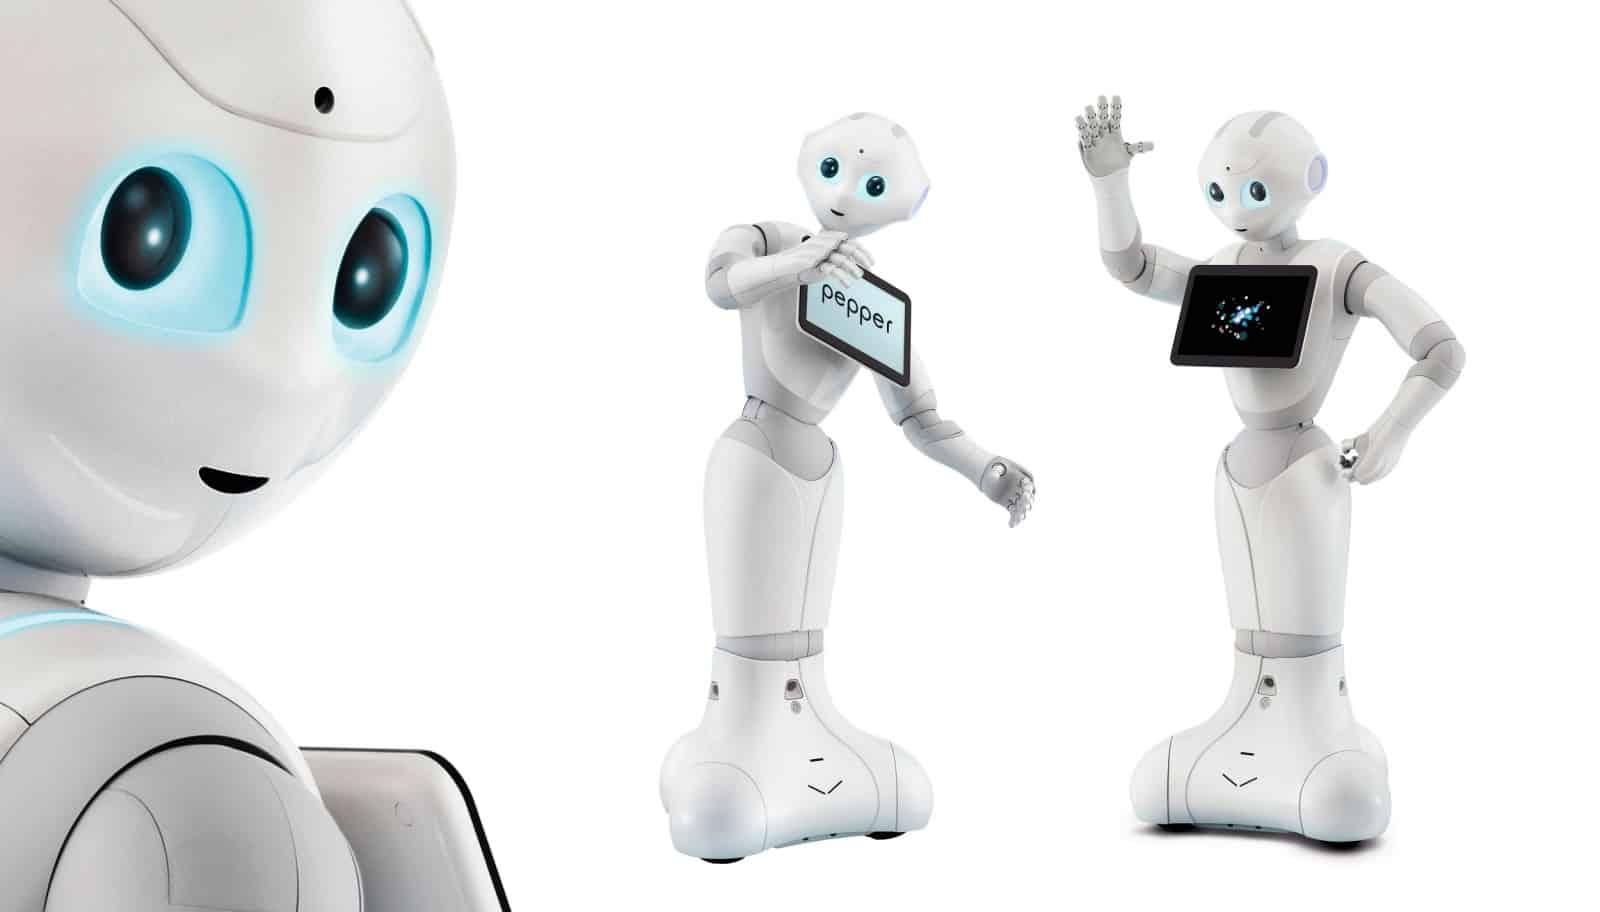 abrazo Seguro Muy lejos Meet Pepper the Humanoid Robot at SDI18 - Service Desk Institute